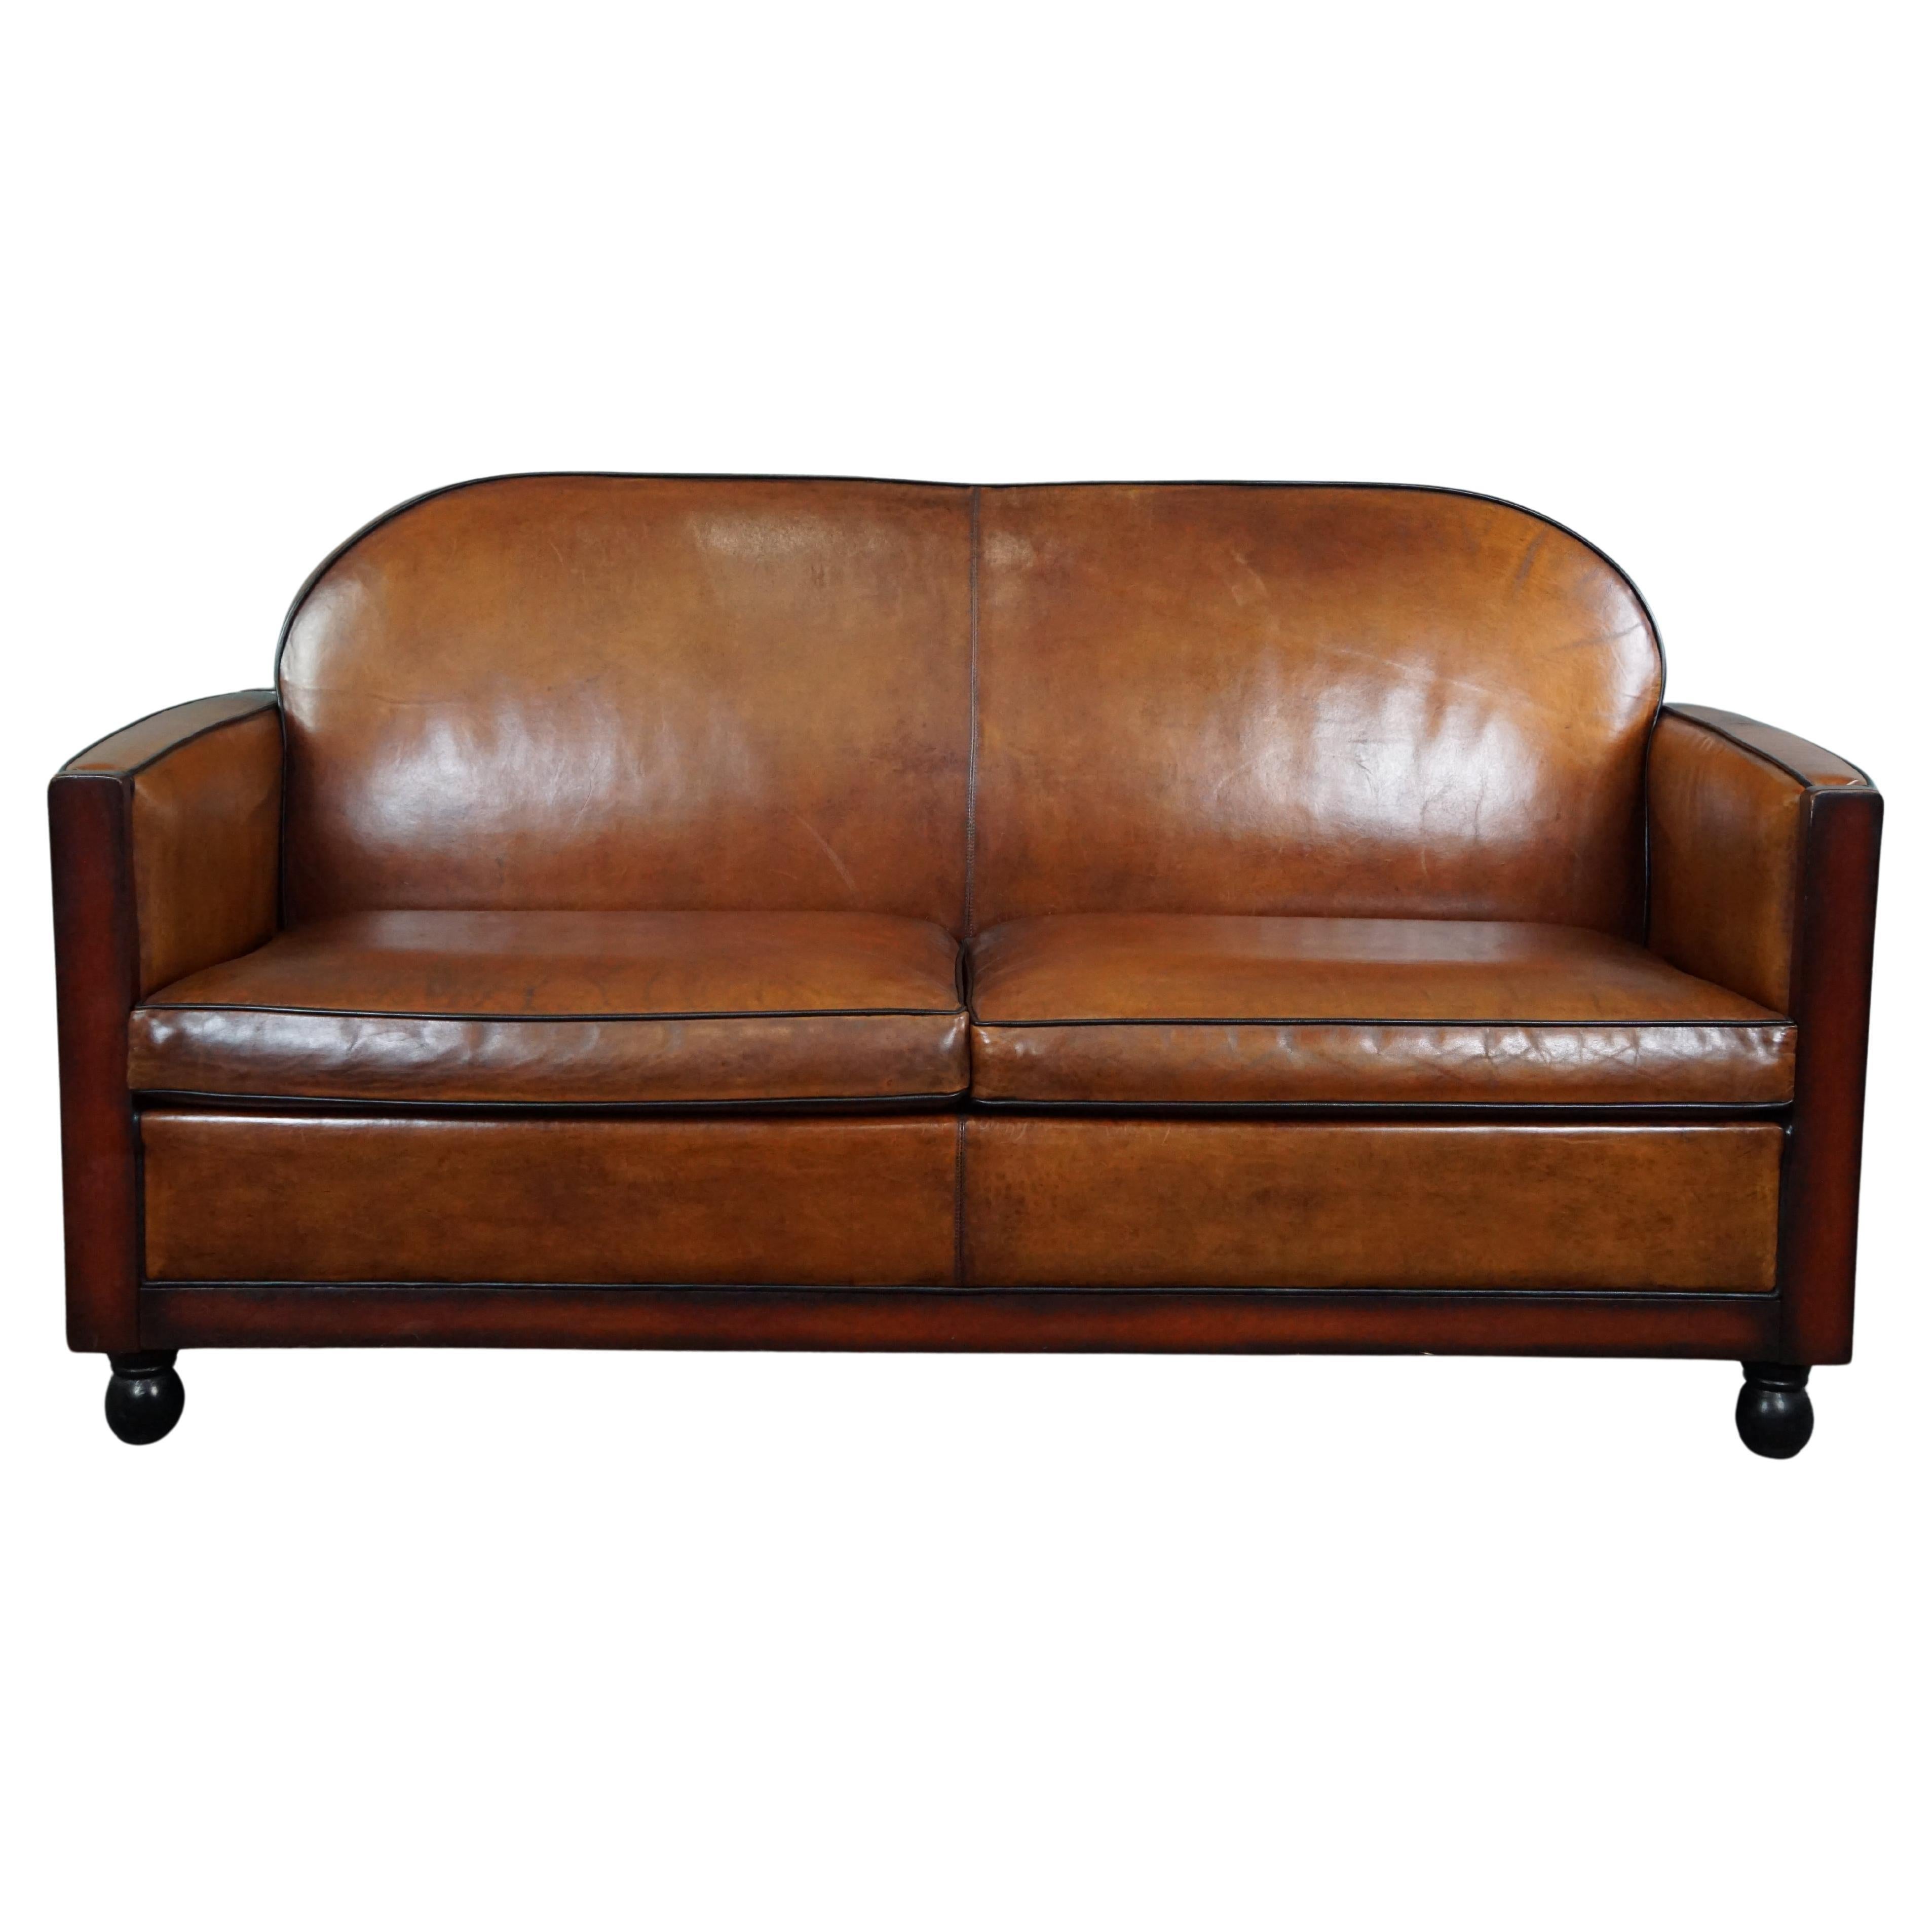 Very striking Art Deco sheepskin 2.5 seater sofa